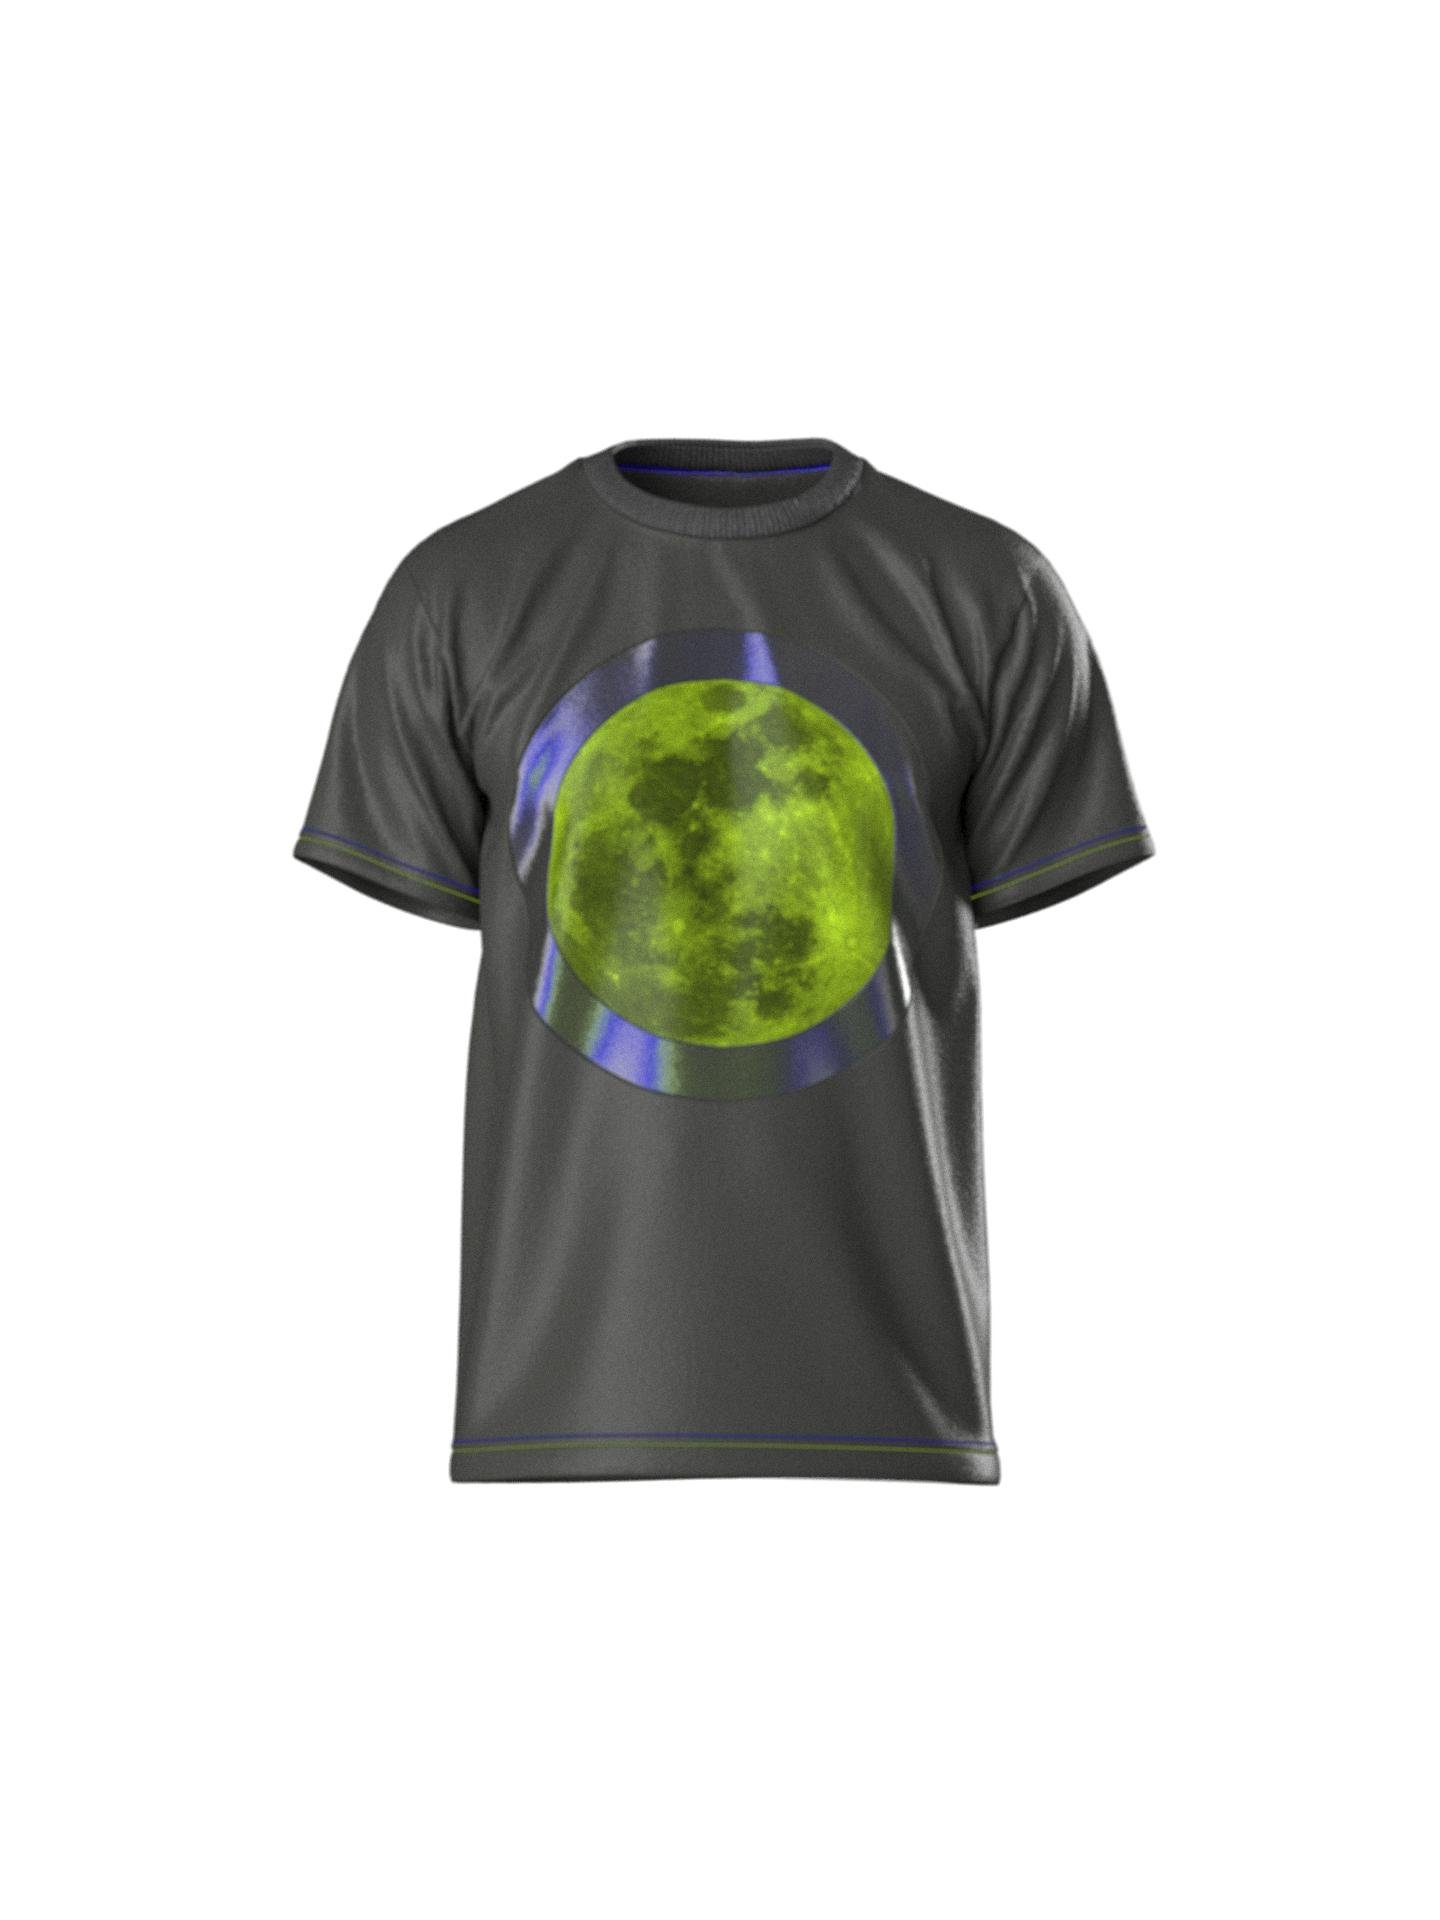 Moon T-shirts by C.GITAL